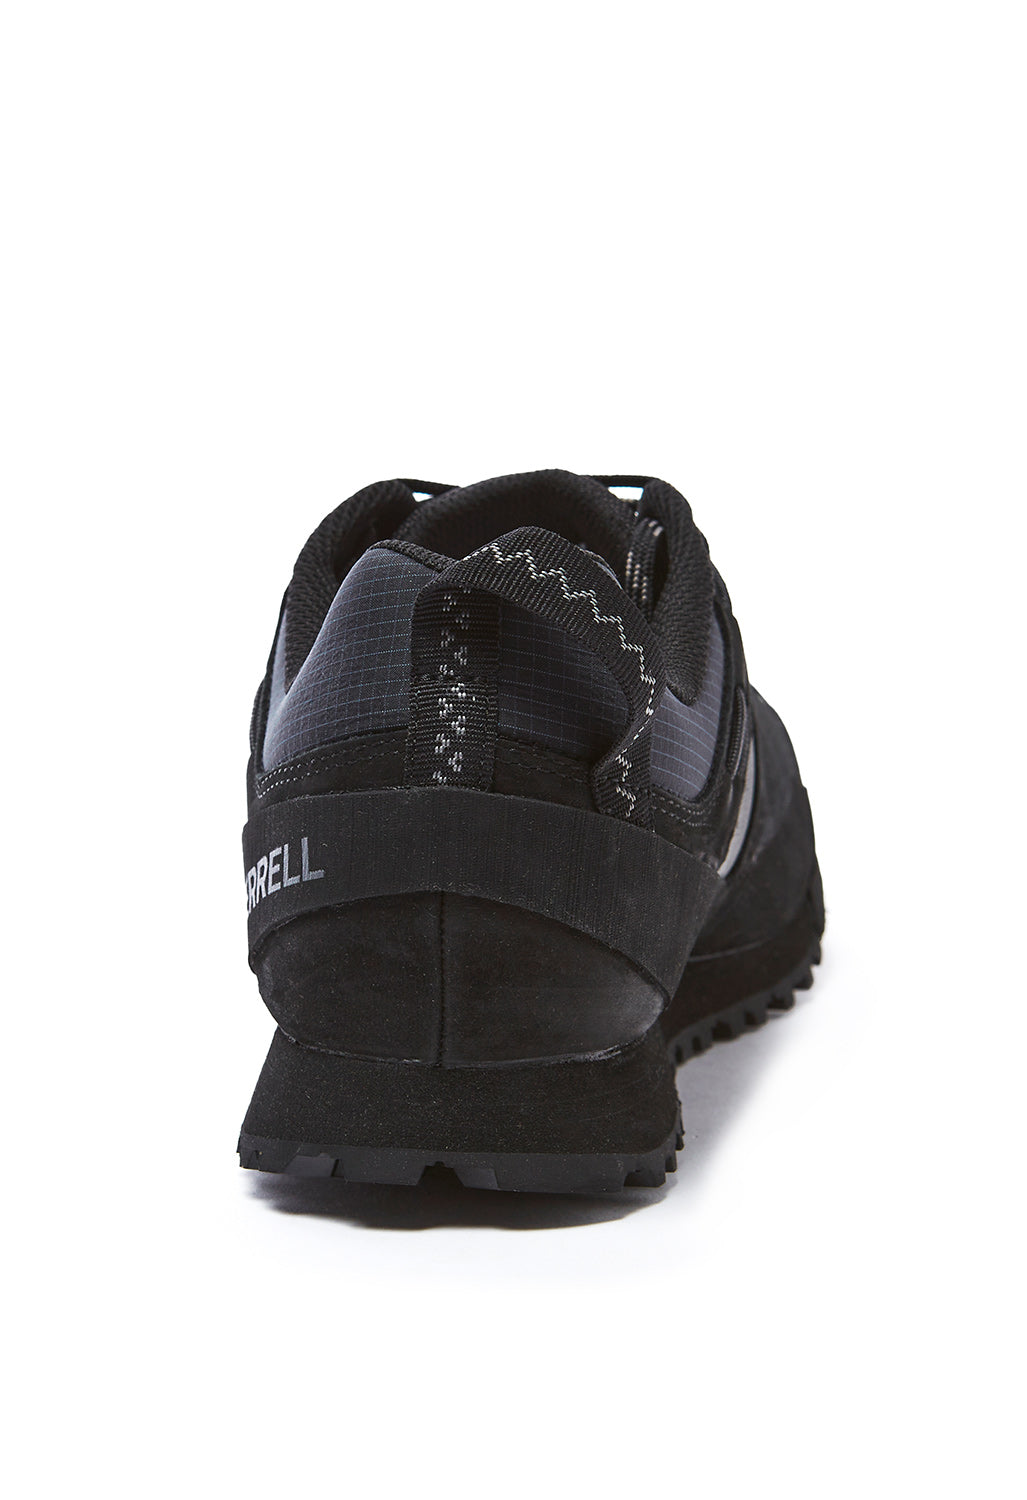 Merrell 1TRL Catalyst Pro 2 Men's Shoes - Black